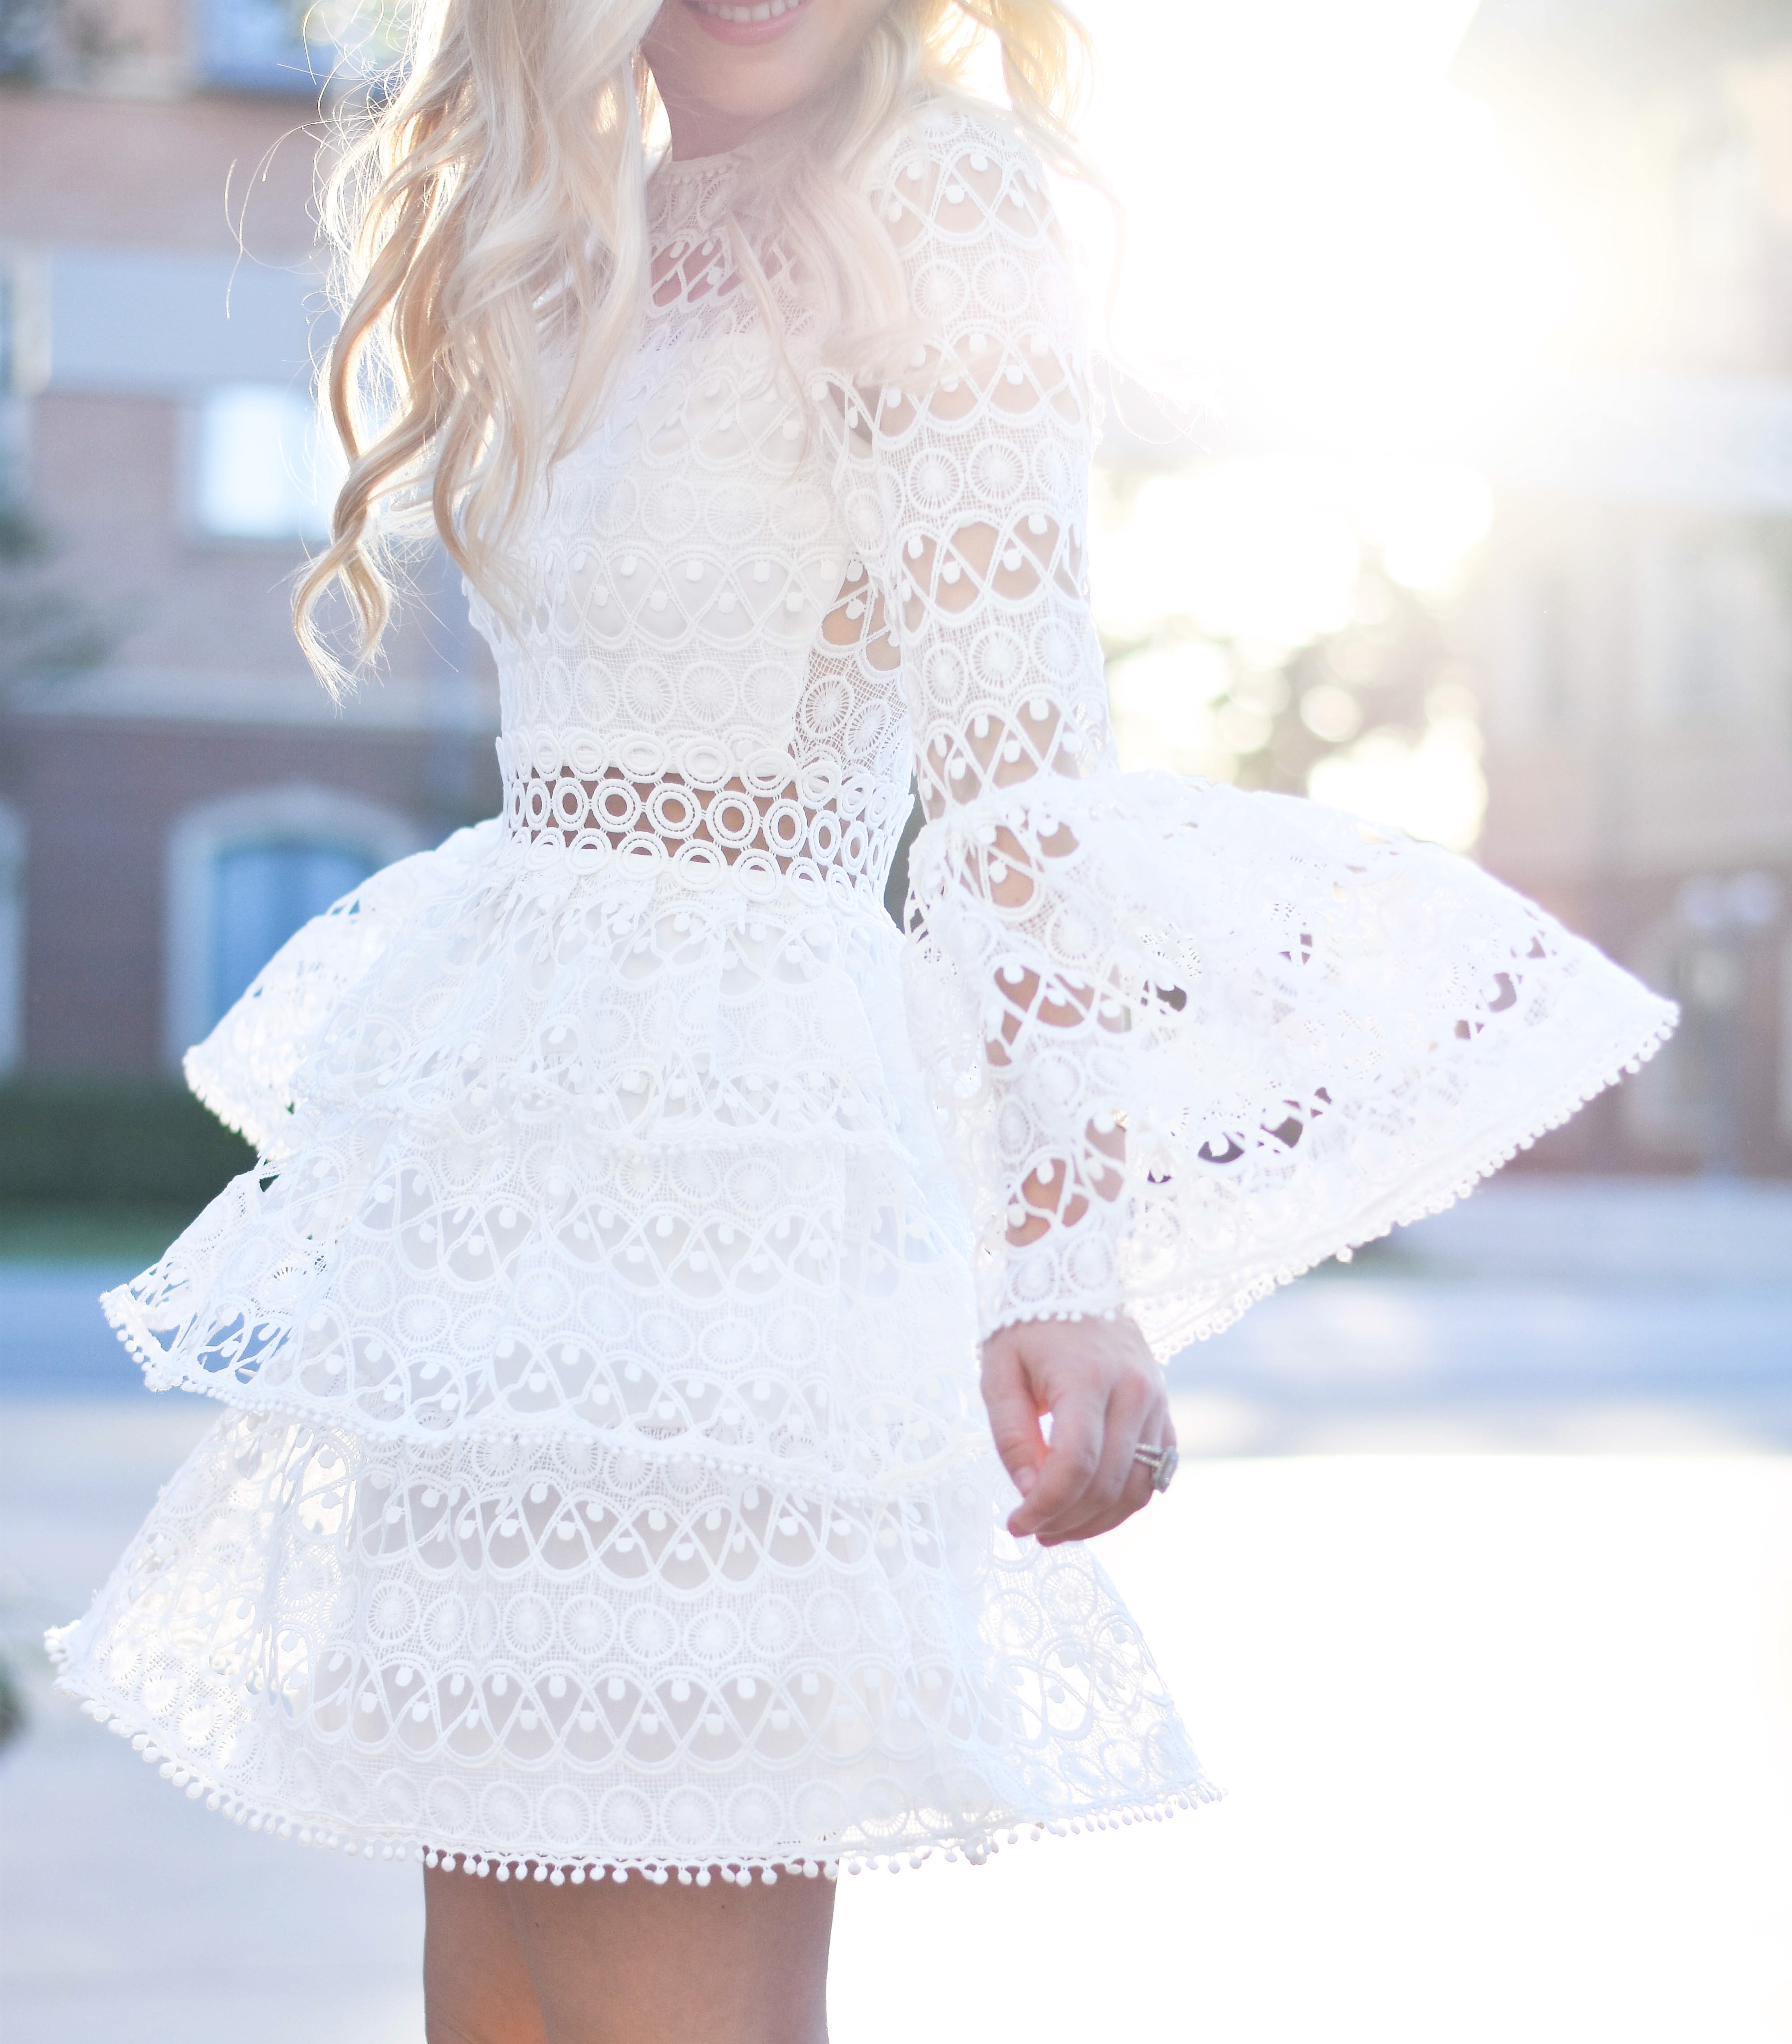 White Lace dress, white dress, alexis dress, alexis lace dress, dallas blogger